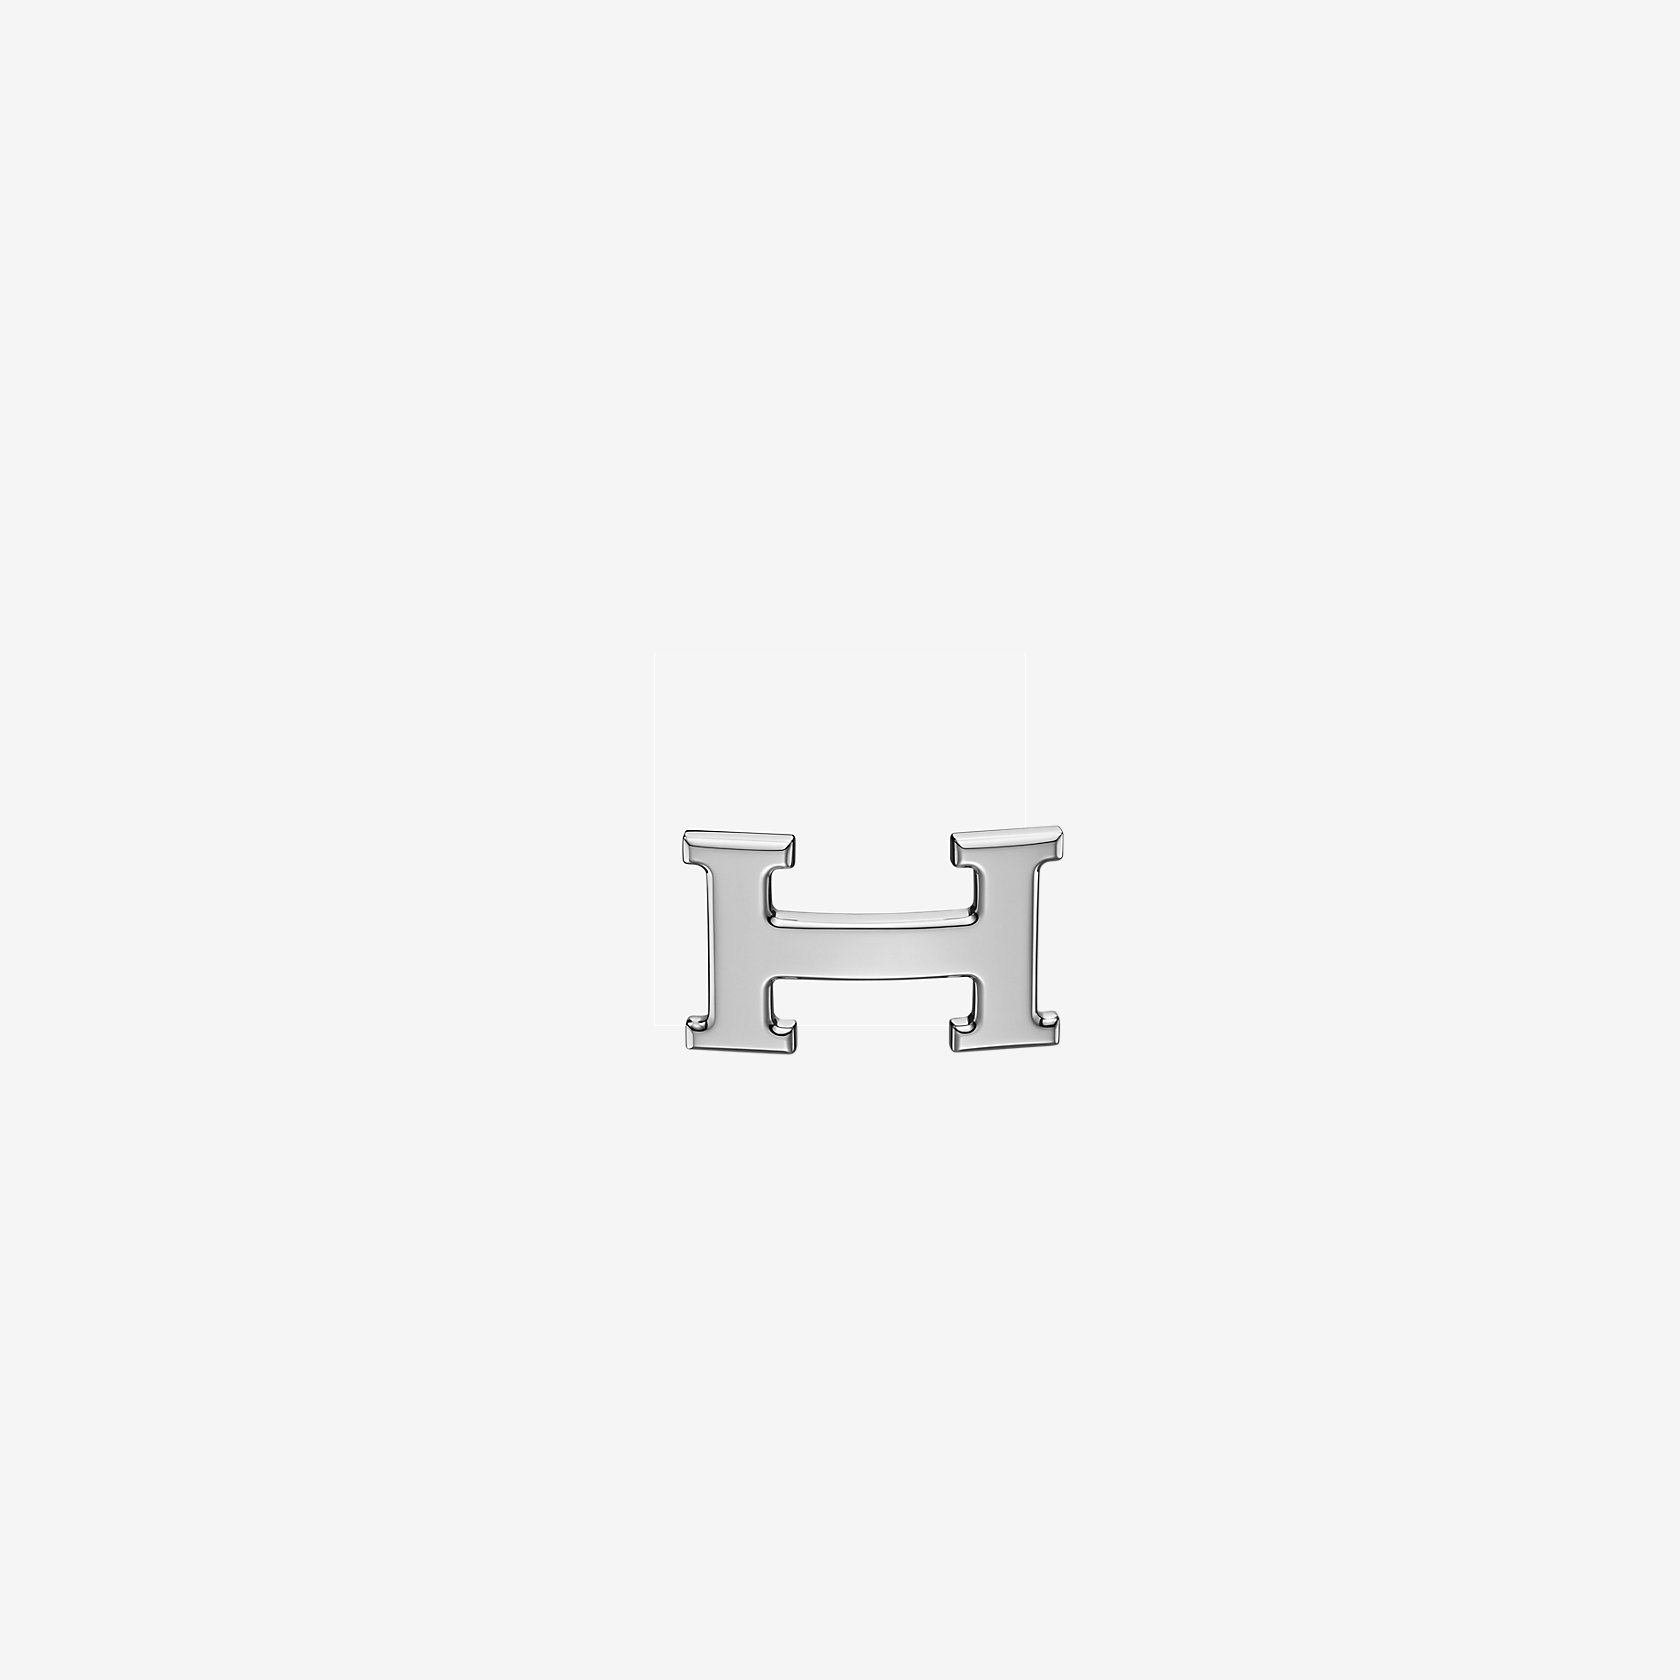 H belt buckle & Reversible leather strap 32 mm | Hermès Australia